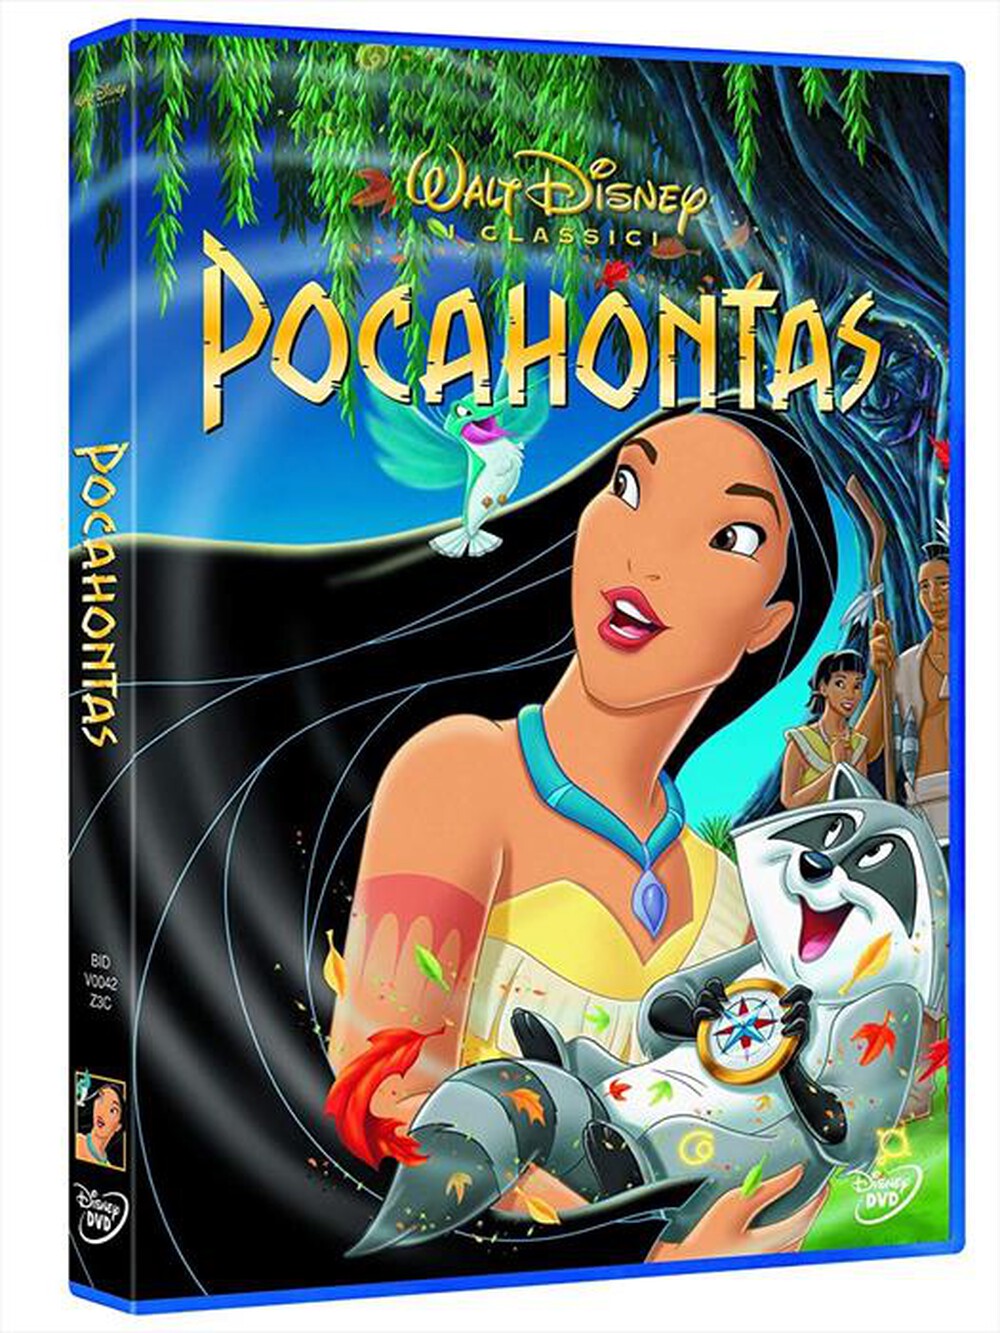 "EAGLE PICTURES - Pocahontas"